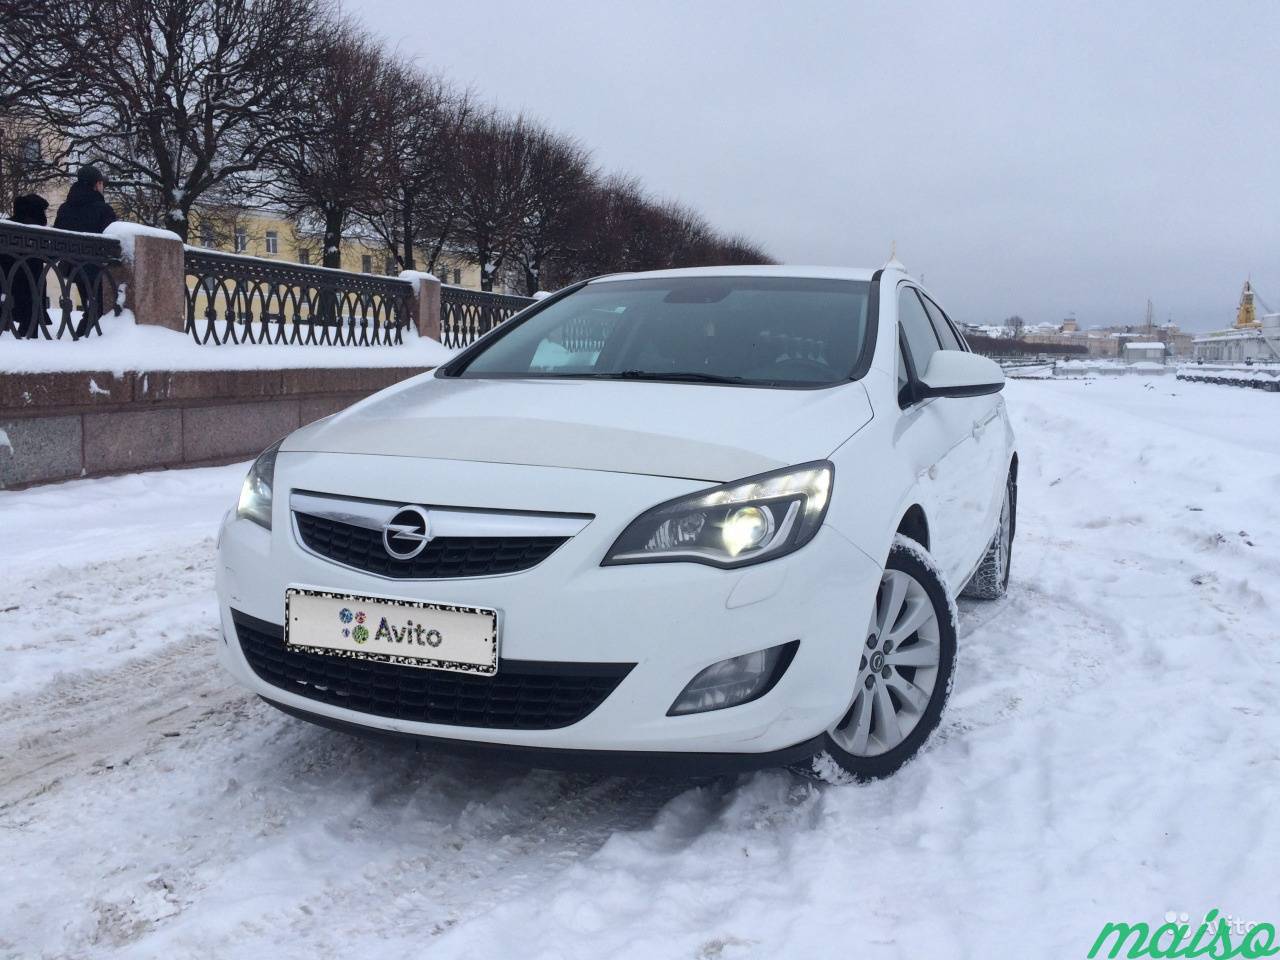 Opel Astra 1.6 AT, 2011, хетчбэк в Санкт-Петербурге. Фото 1